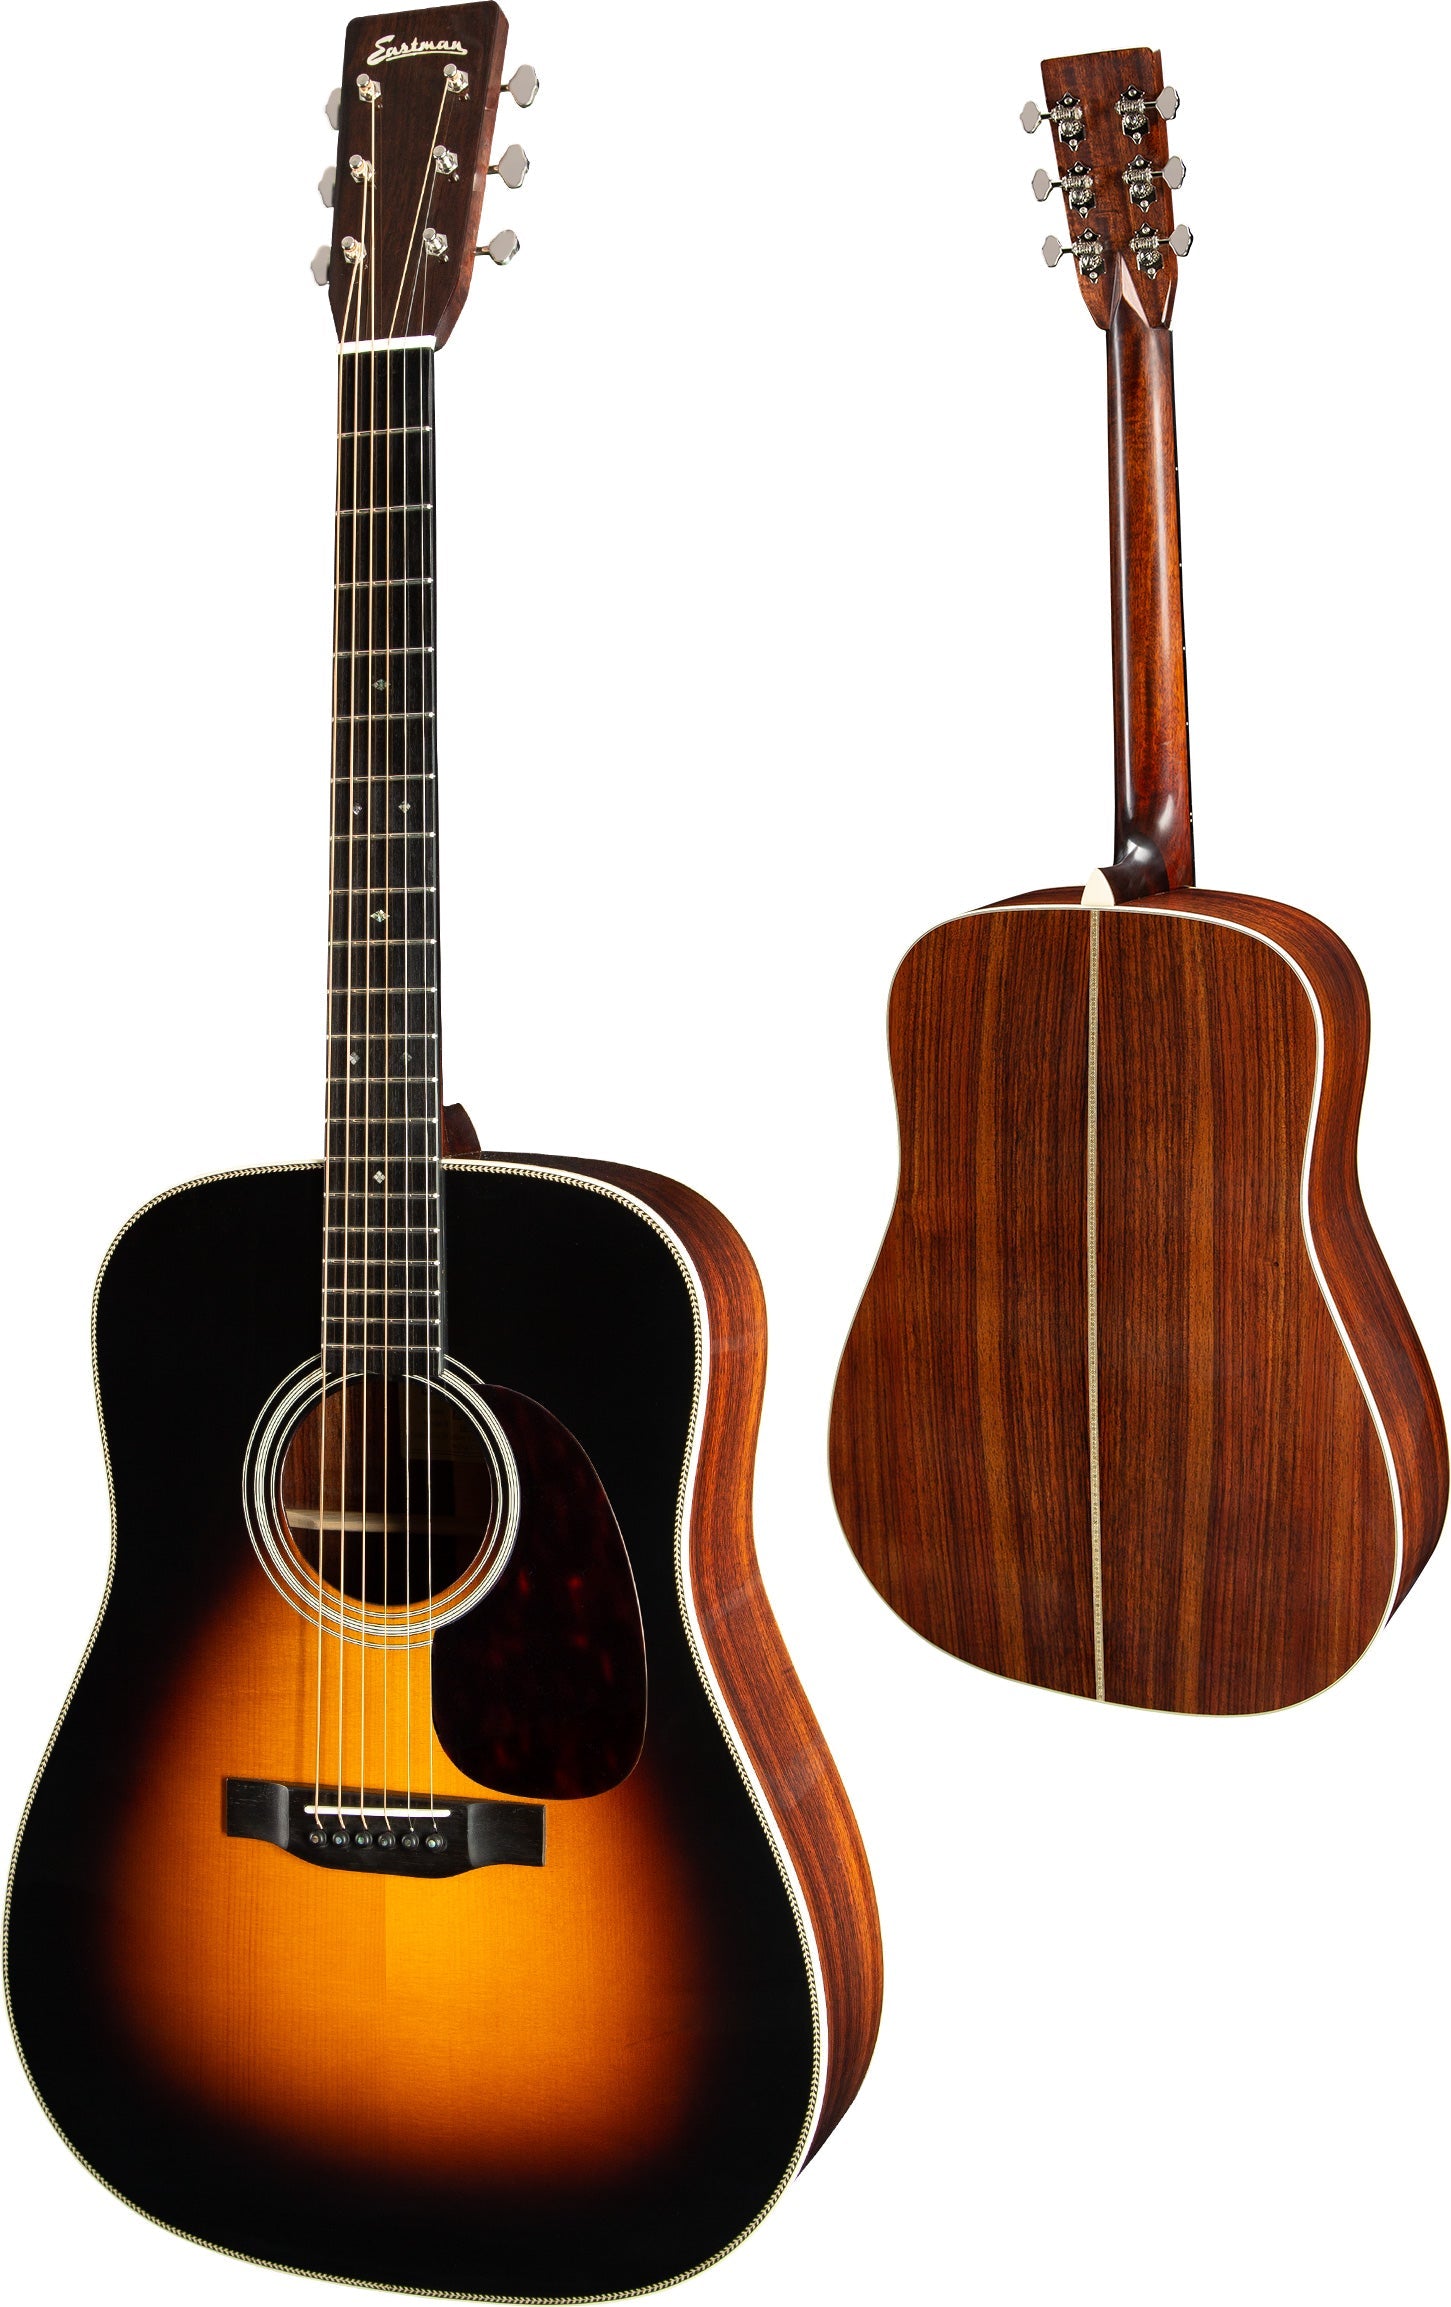 Eastman E20D-SB, Acoustic Guitar for sale at Richards Guitars.